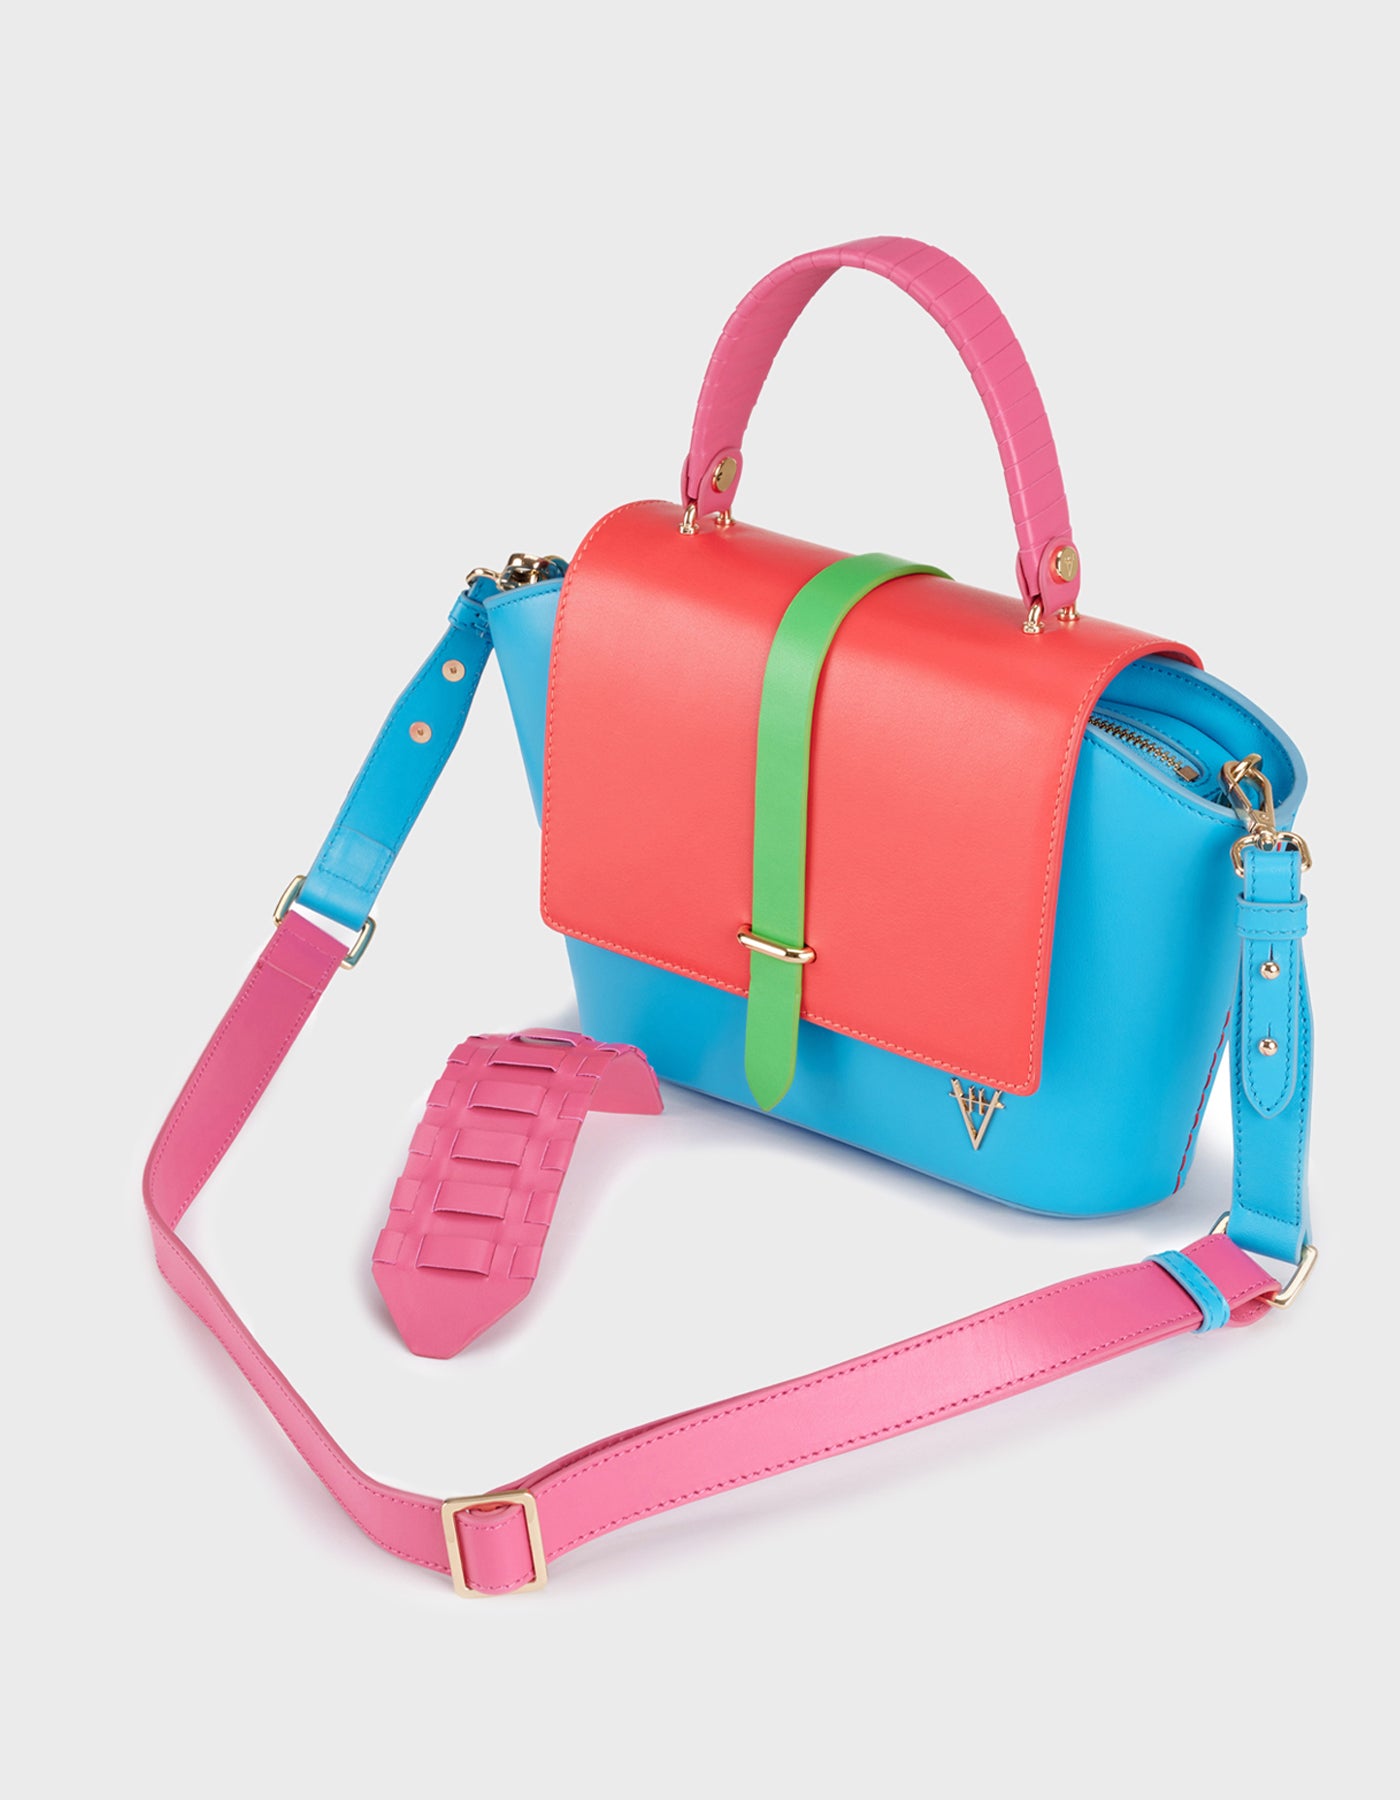 HiVa Atelier | Ventus Shoulder Bag Sky Blue & Fuchsia & Green & Coral | Beautiful and Versatile